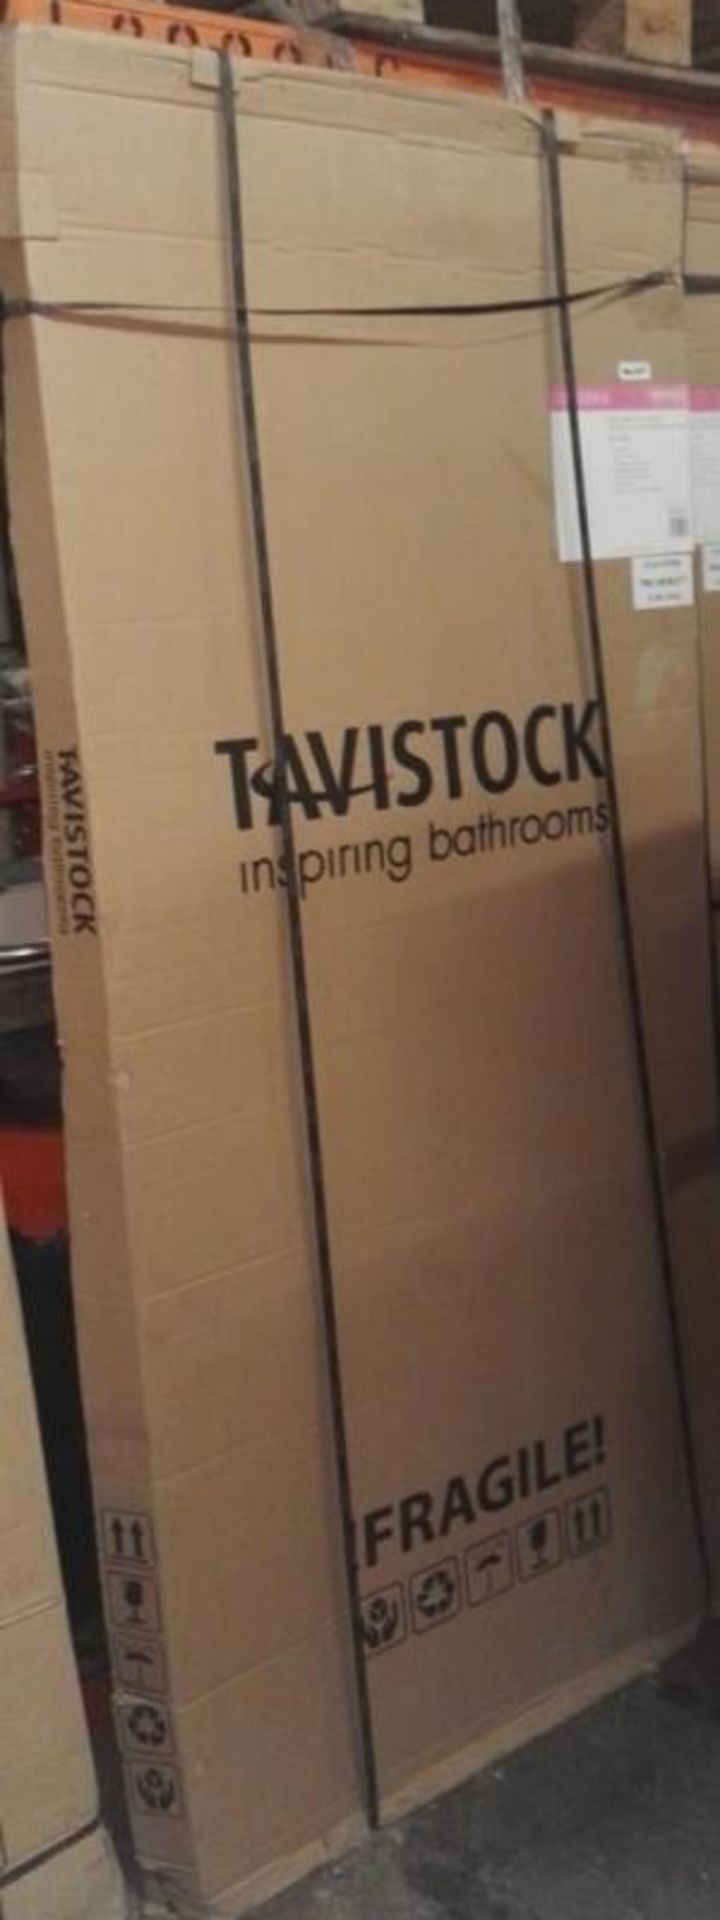 1 x Tavistock 'OXYGEN 8' Side Panel - Dimensions: 900 x 1950 - Ref: ma357A - New / Boxed Stock - CL0